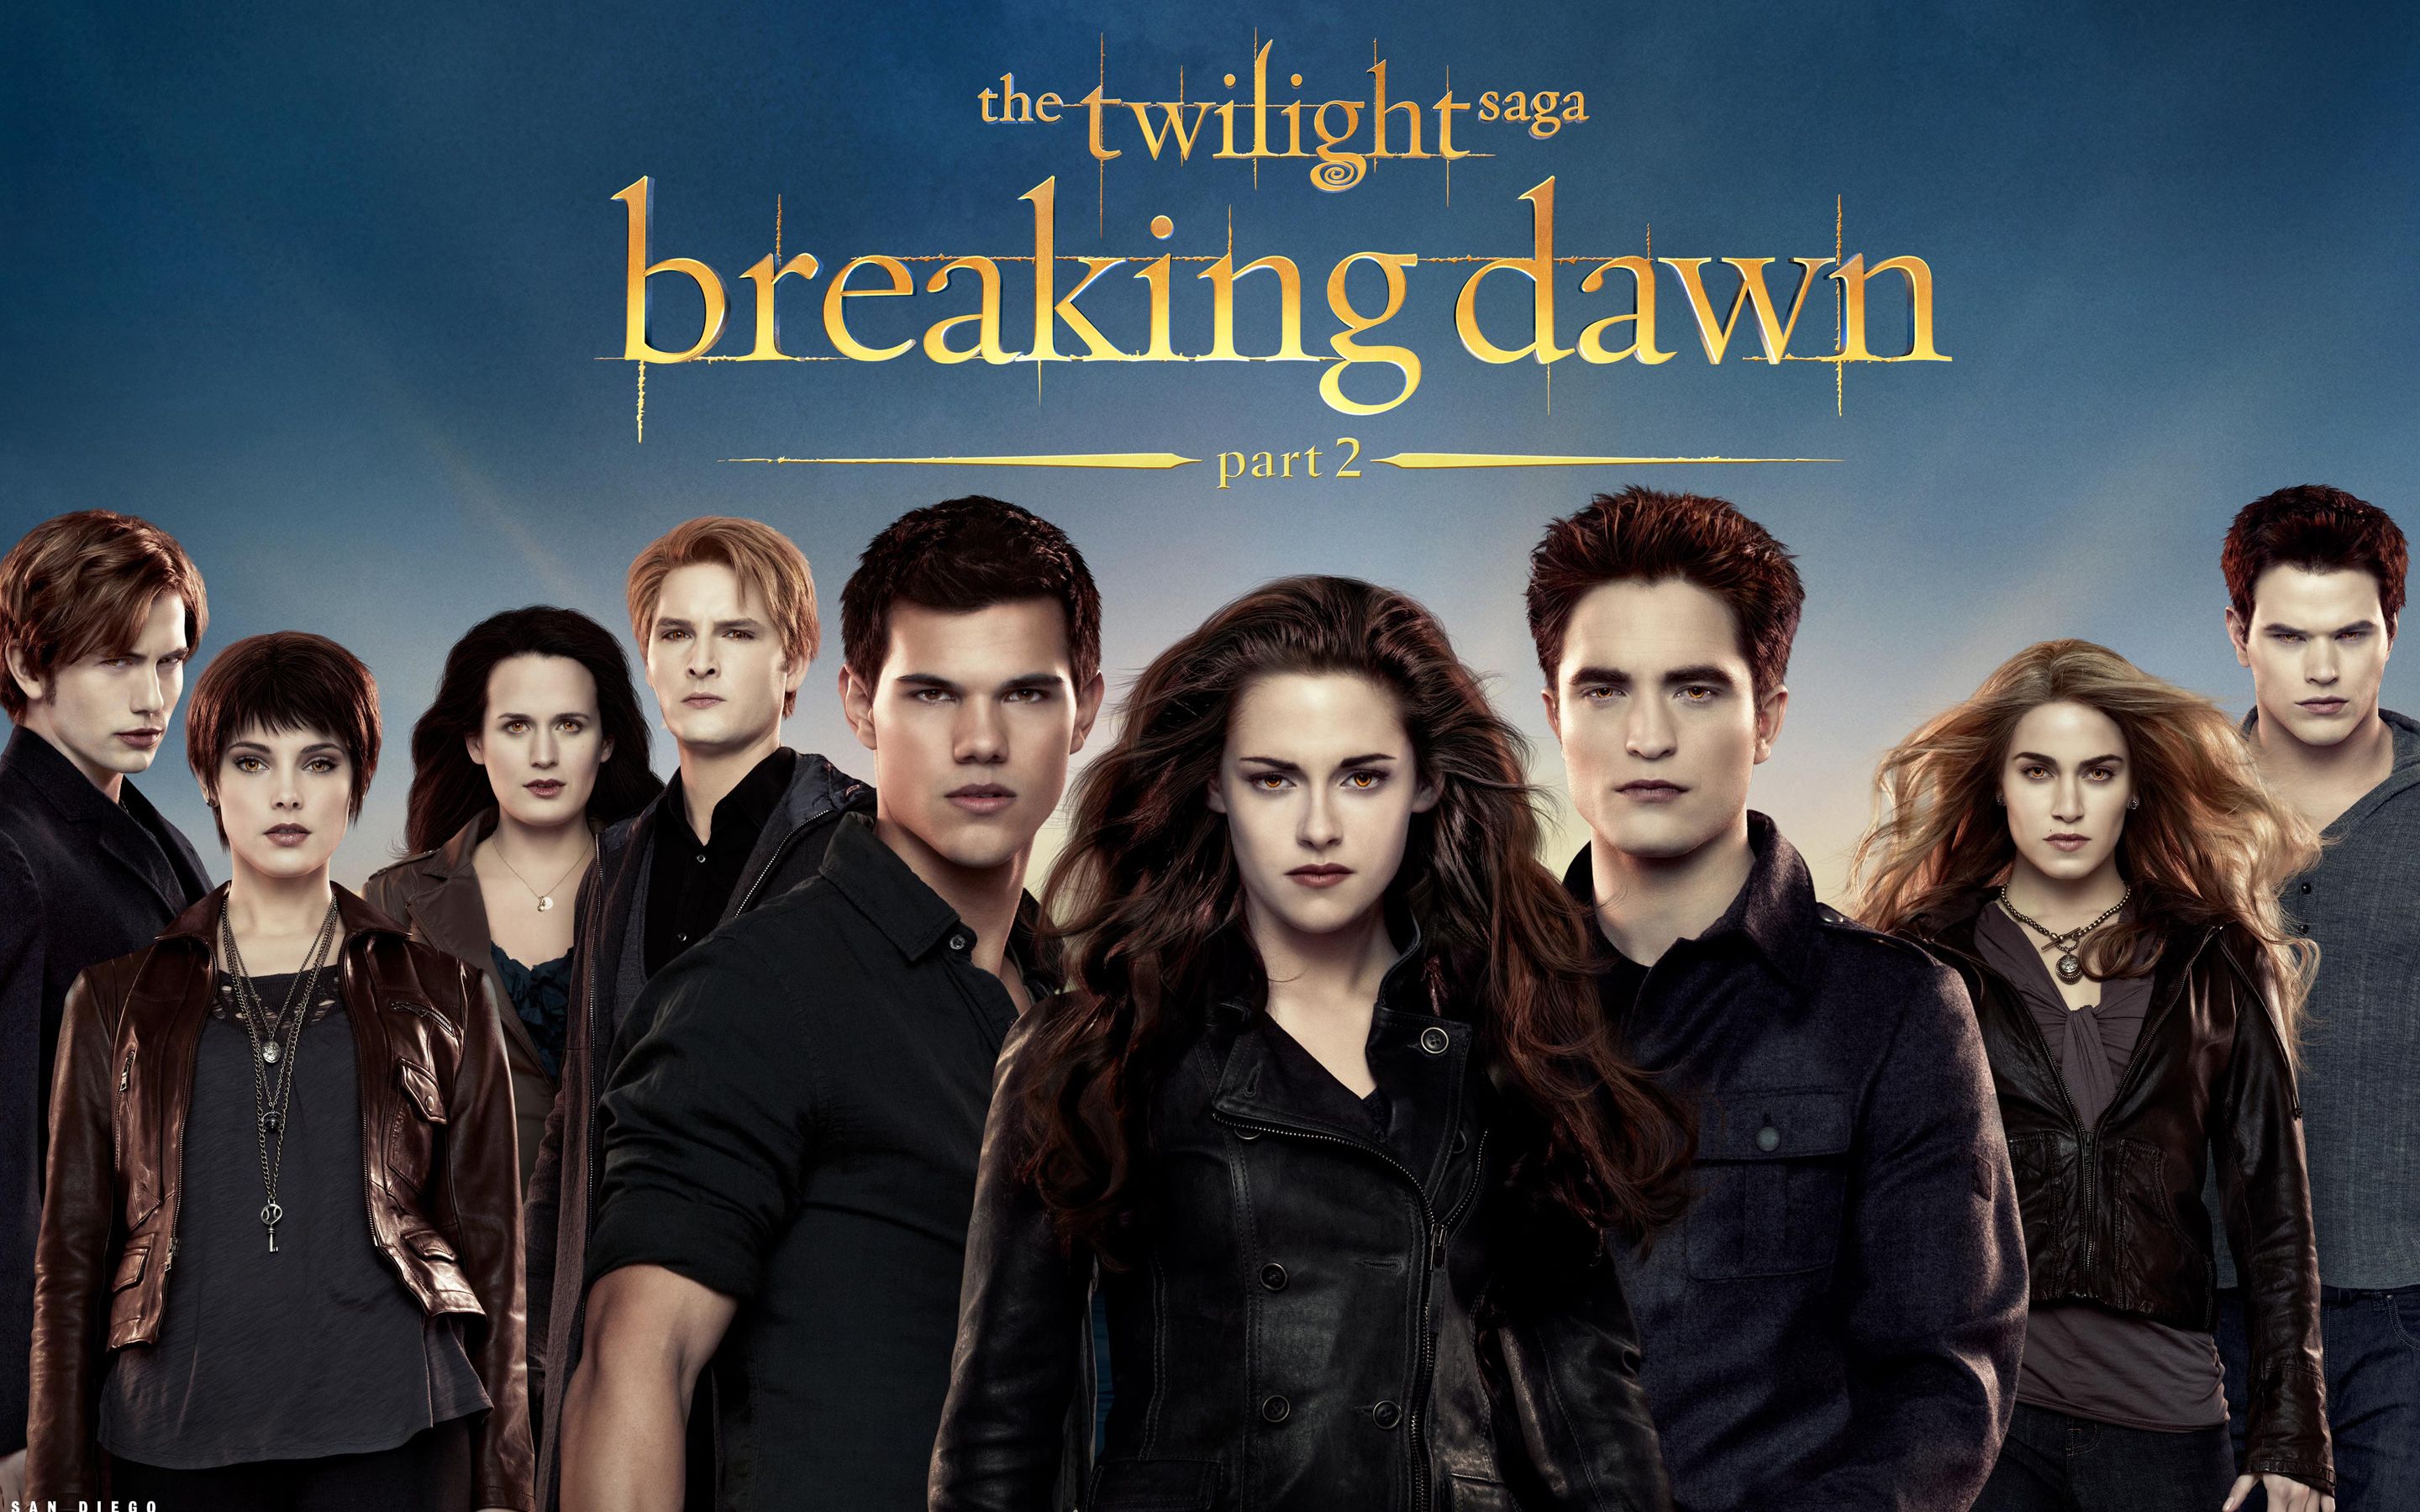 The Twilight Saga Breaking Dawn Part 2 Wallpapers | HD Wallpapers